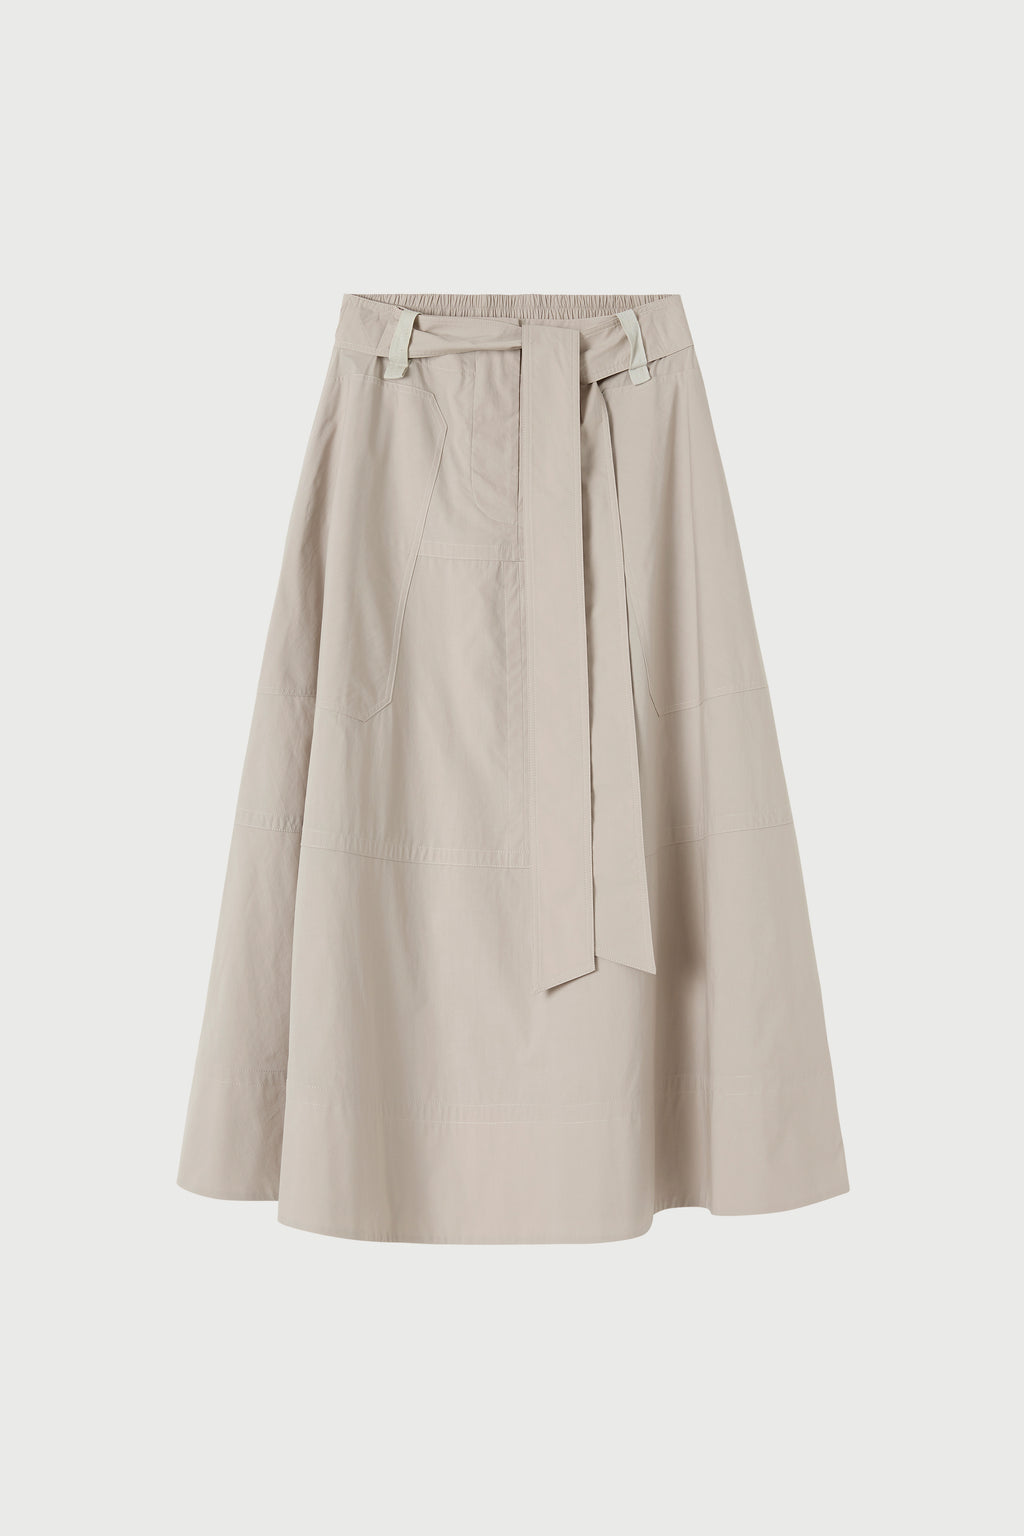 Shop the LM Poplin Flare Skirt by Lee Mathews